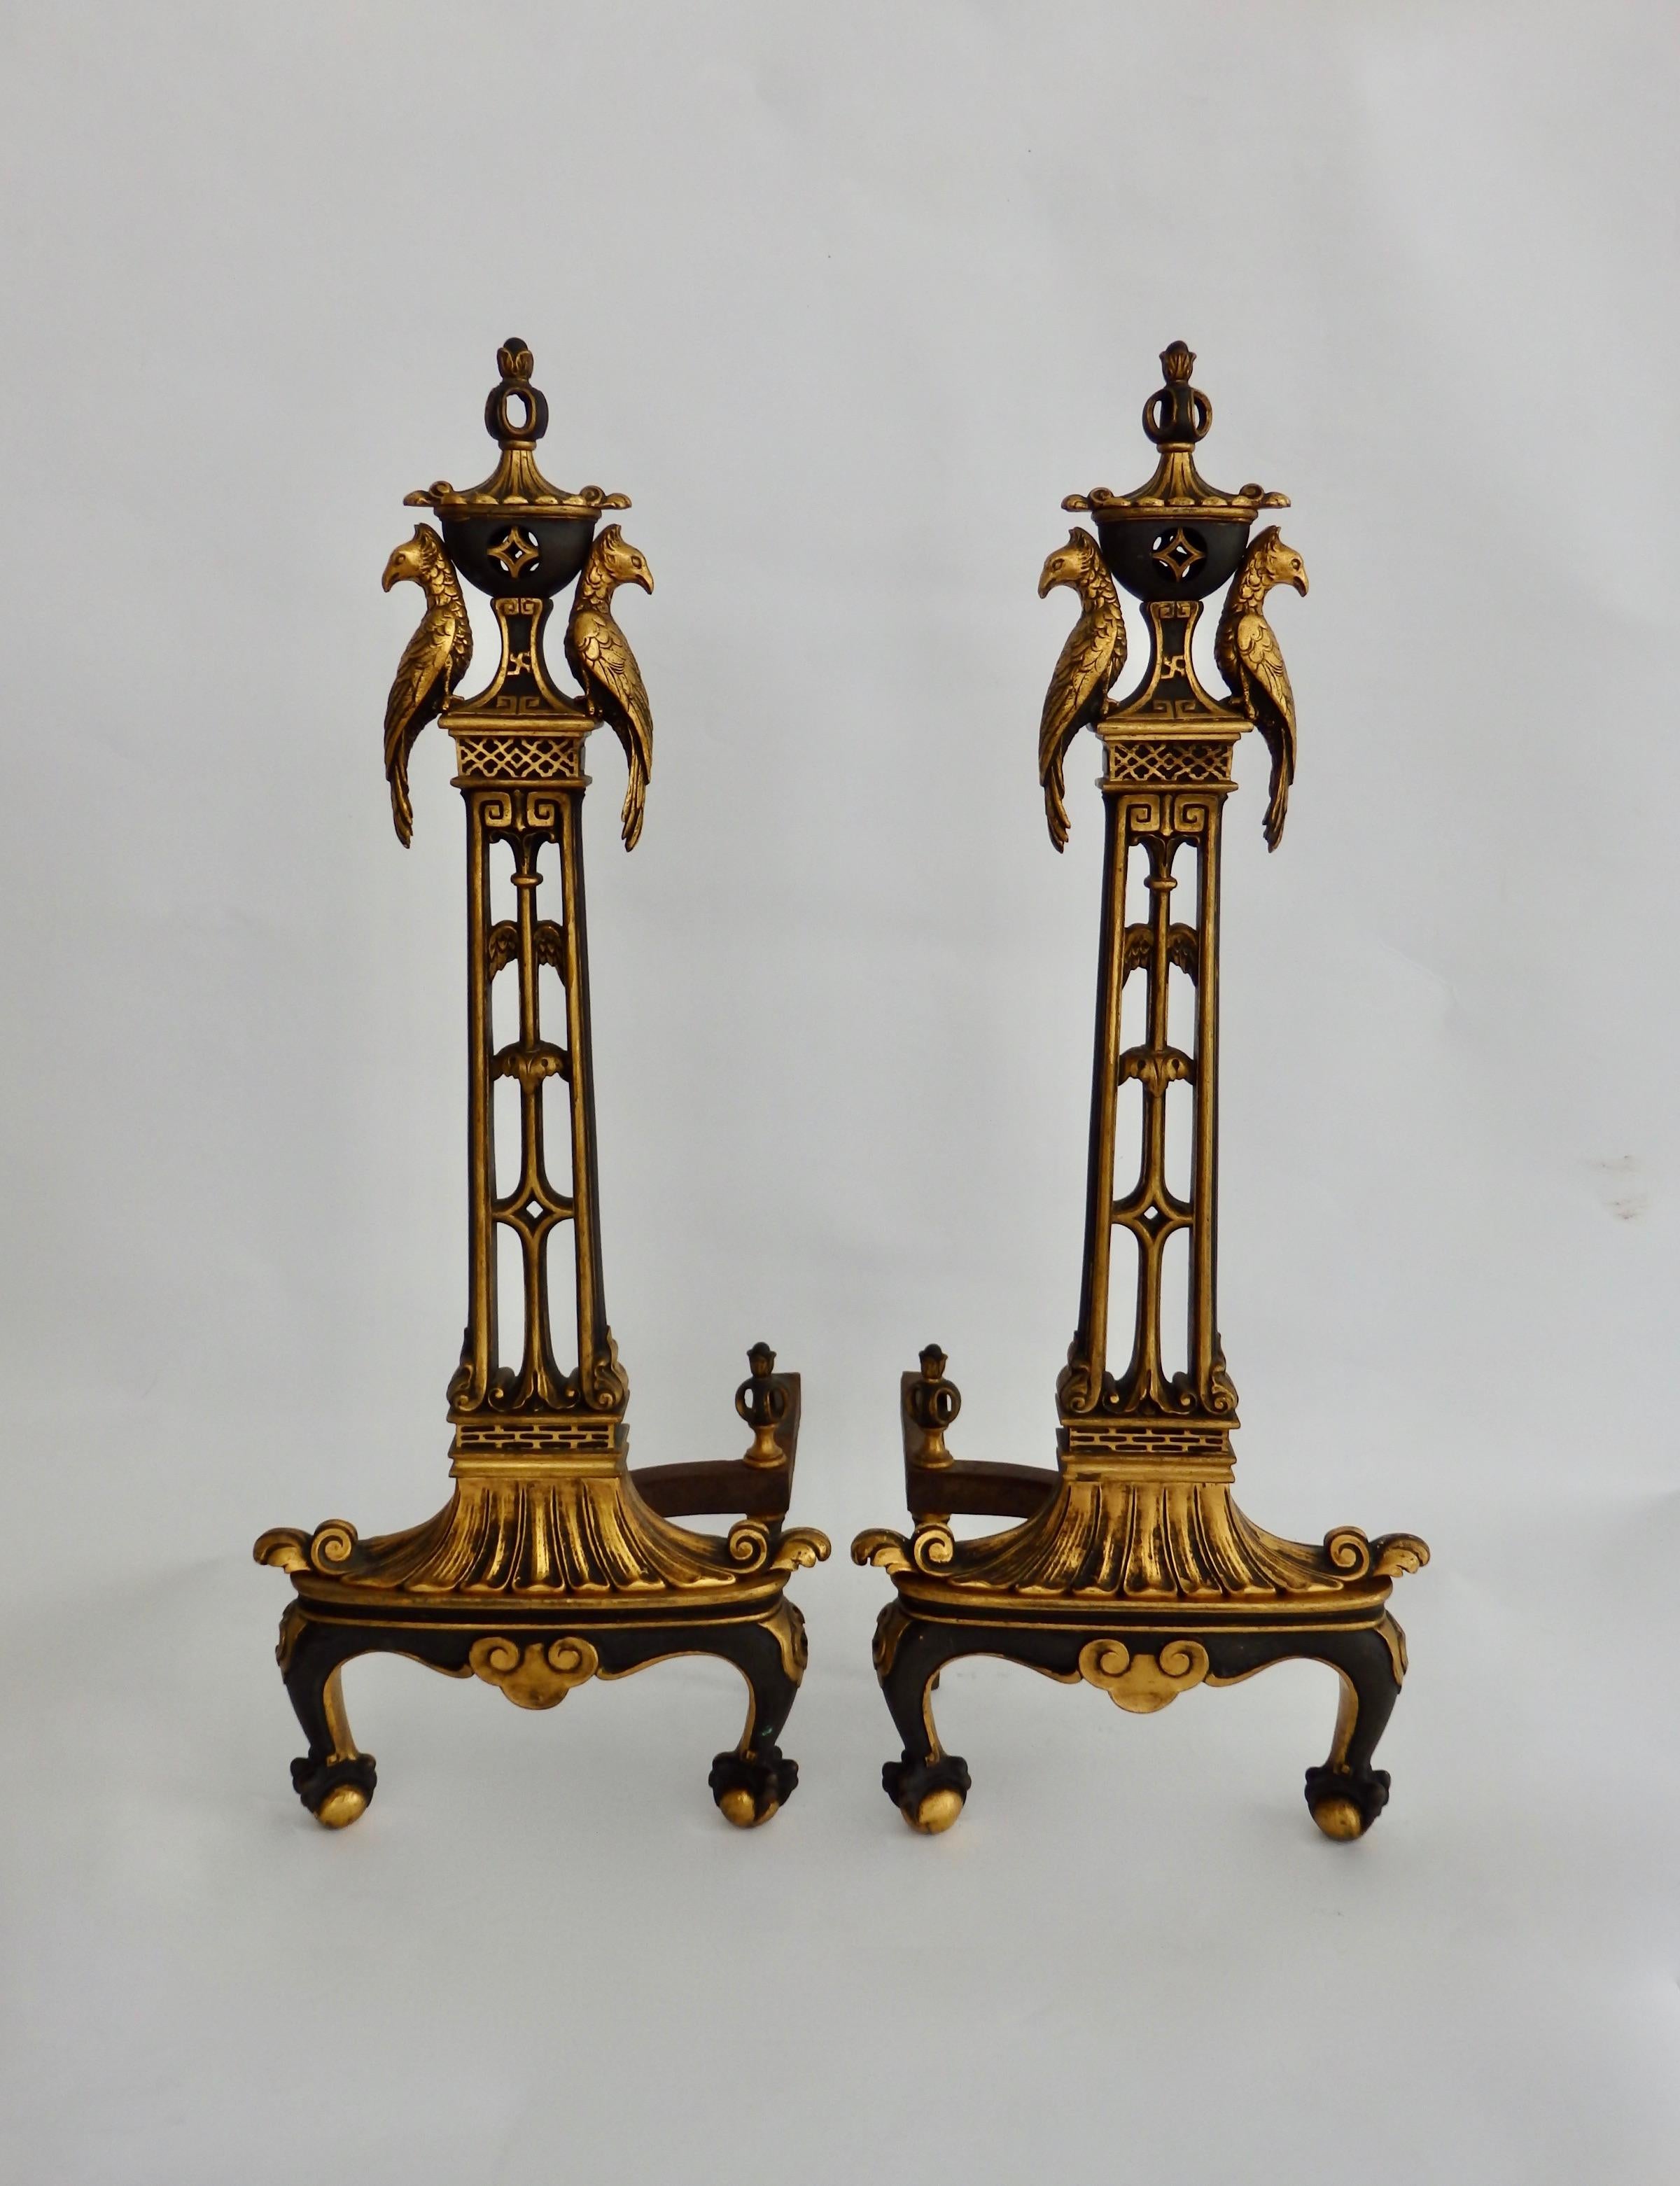 Elegant pair of bronze andirons with gold gilding. Fine original finish and patina.